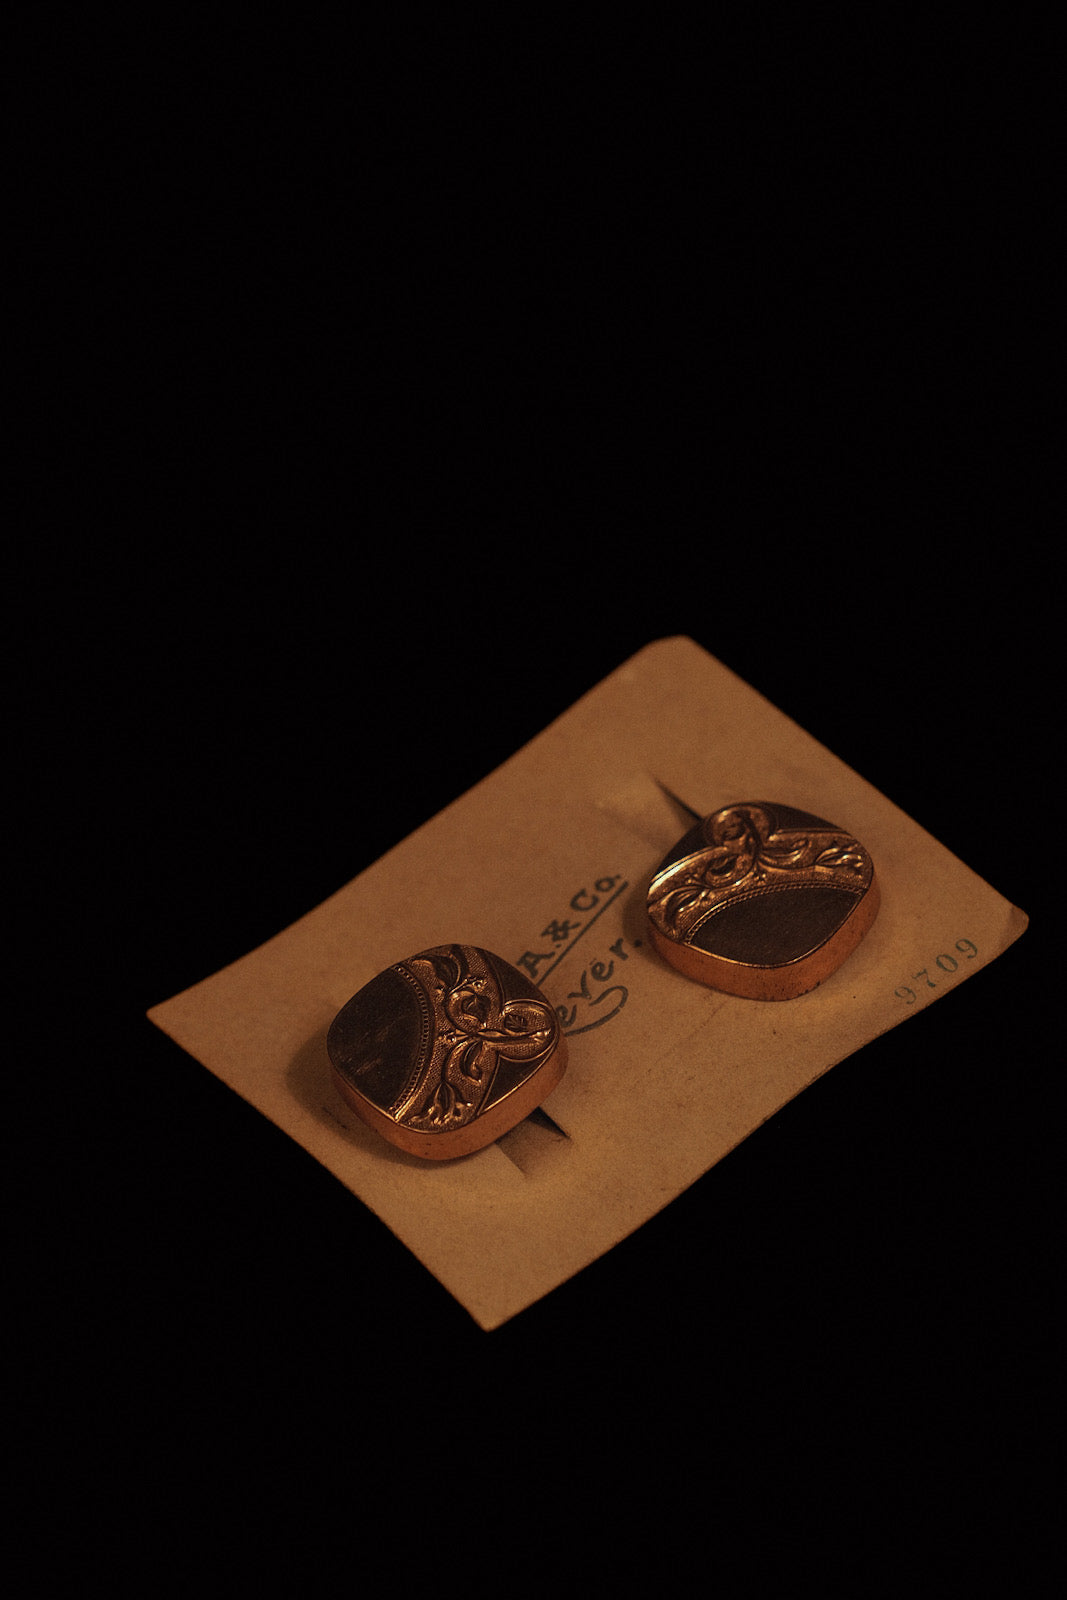 Edwardian Rolled Gold Cufflinks With Leaf Decoration On Display Card